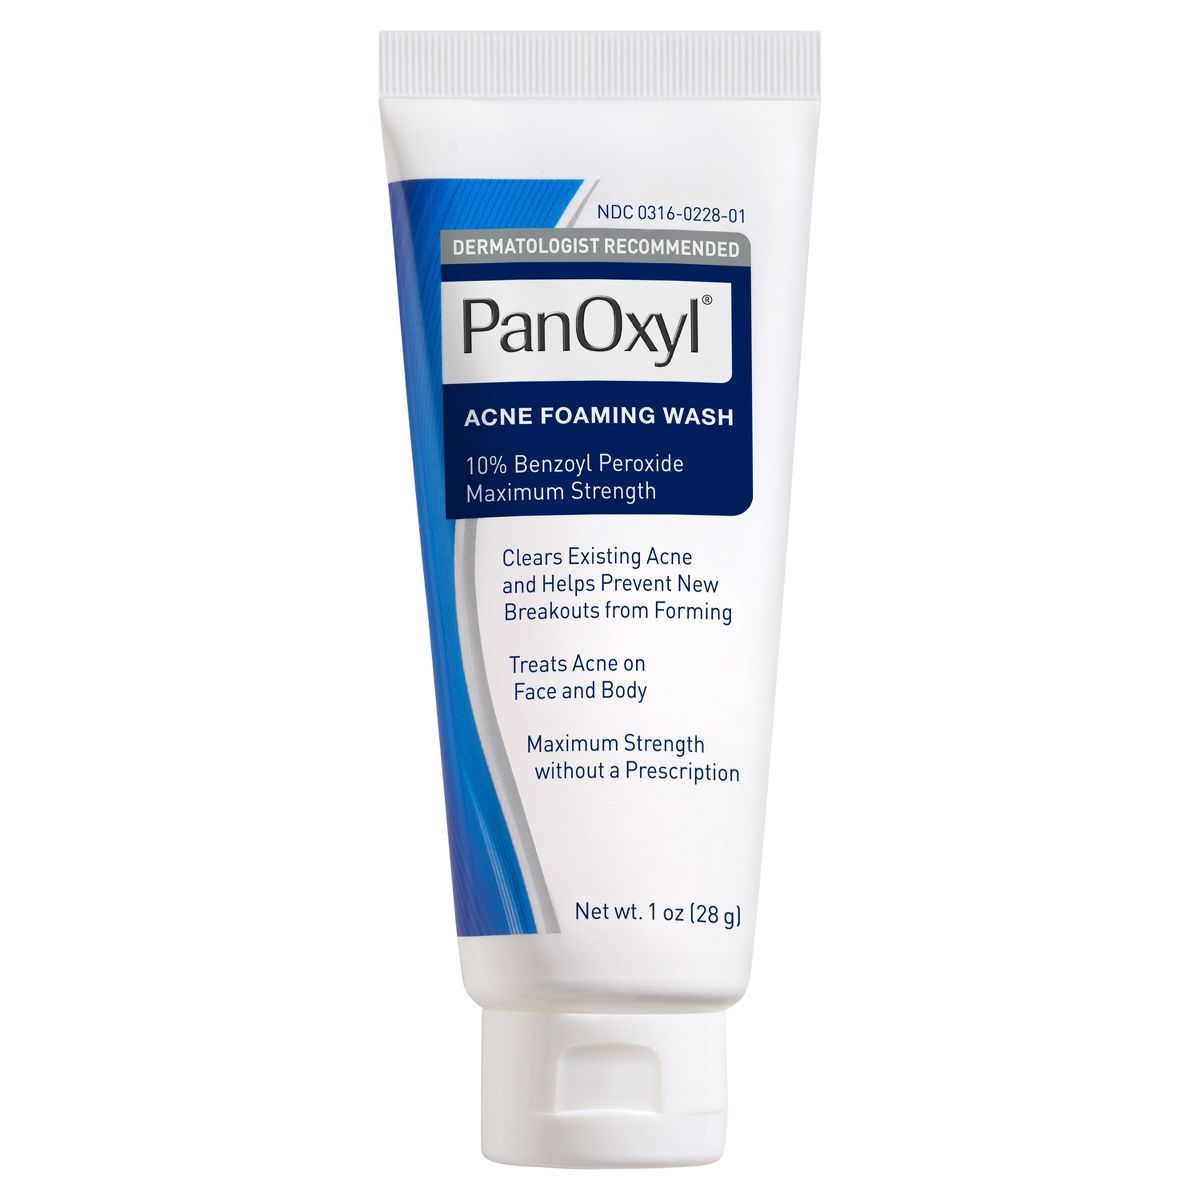 PanOxyl 10% Benzoyl Peroxide Acne Foaming Wash - 1oz | Target